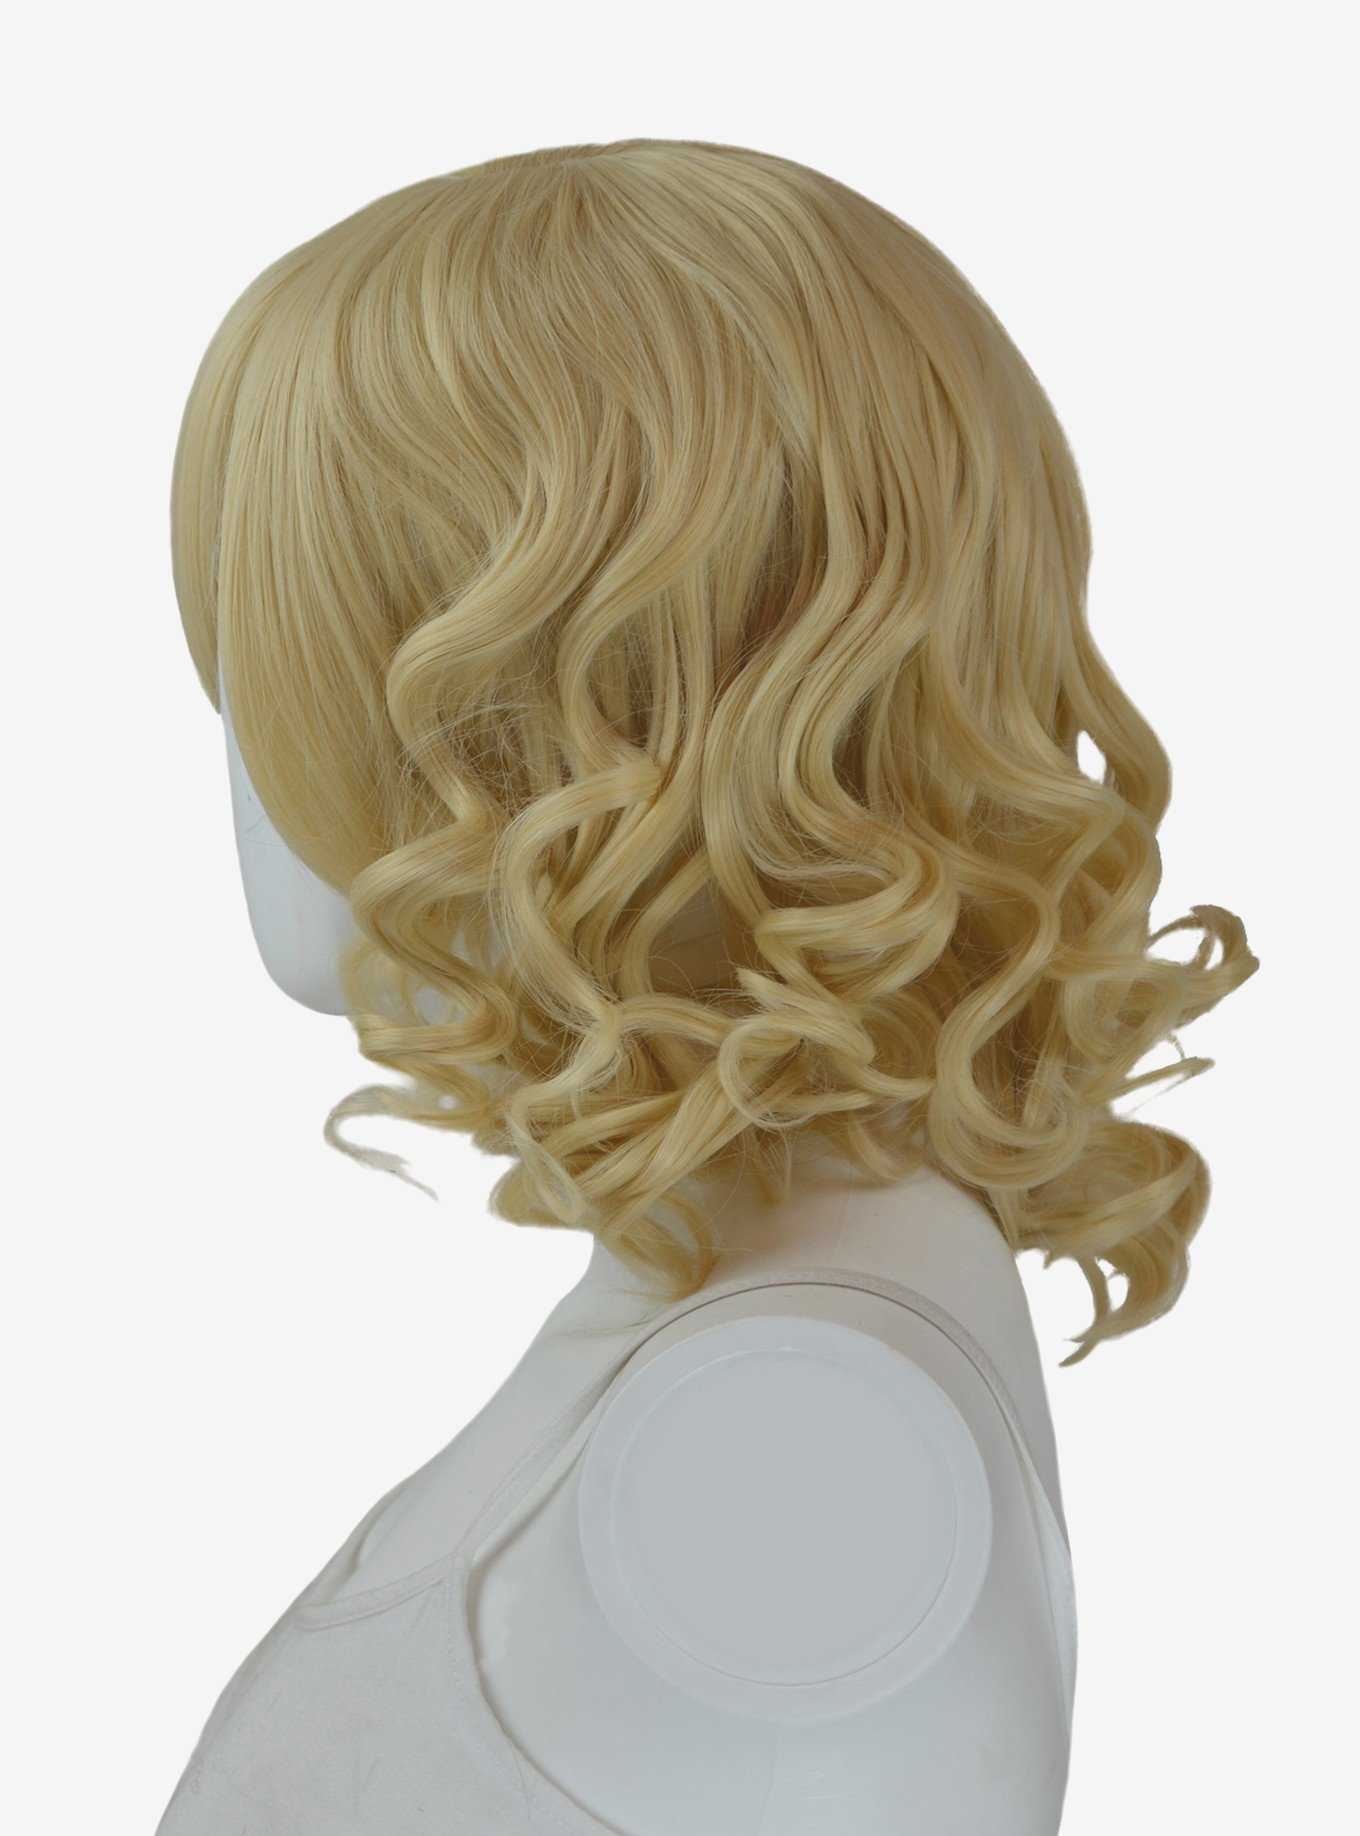 Epic Cosplay Diana Natural Blonde Short Curly Wig, , hi-res